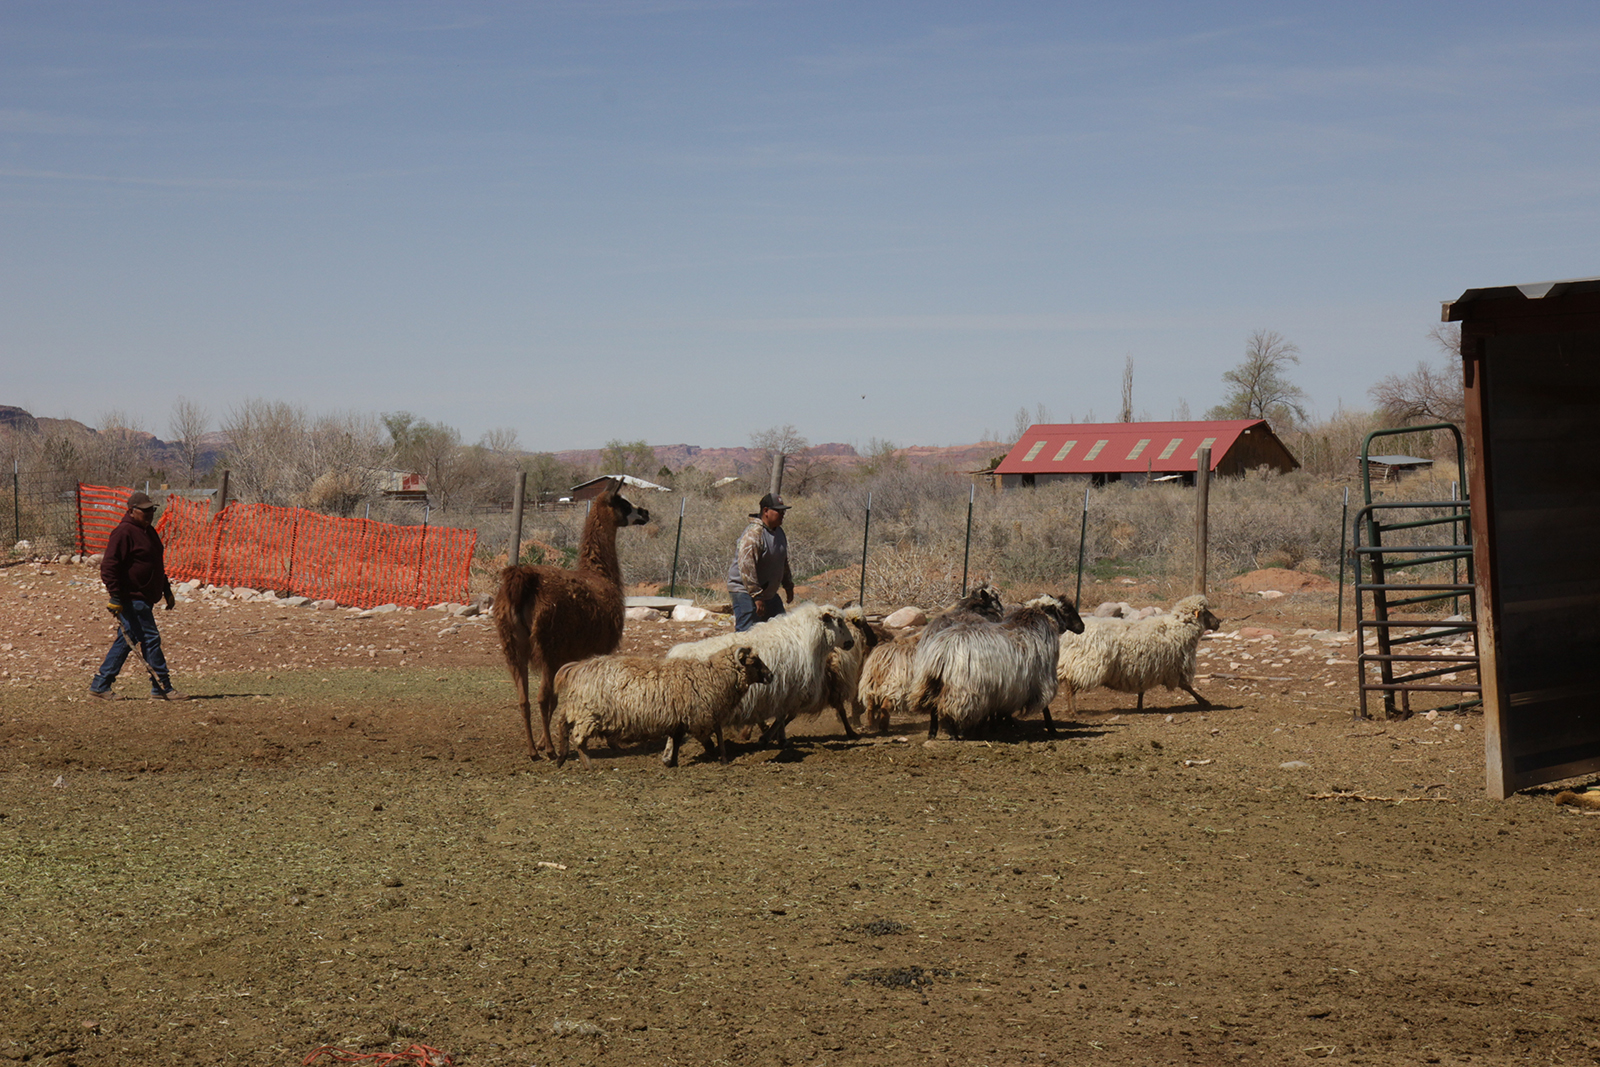 Two men herding sheep and a llama